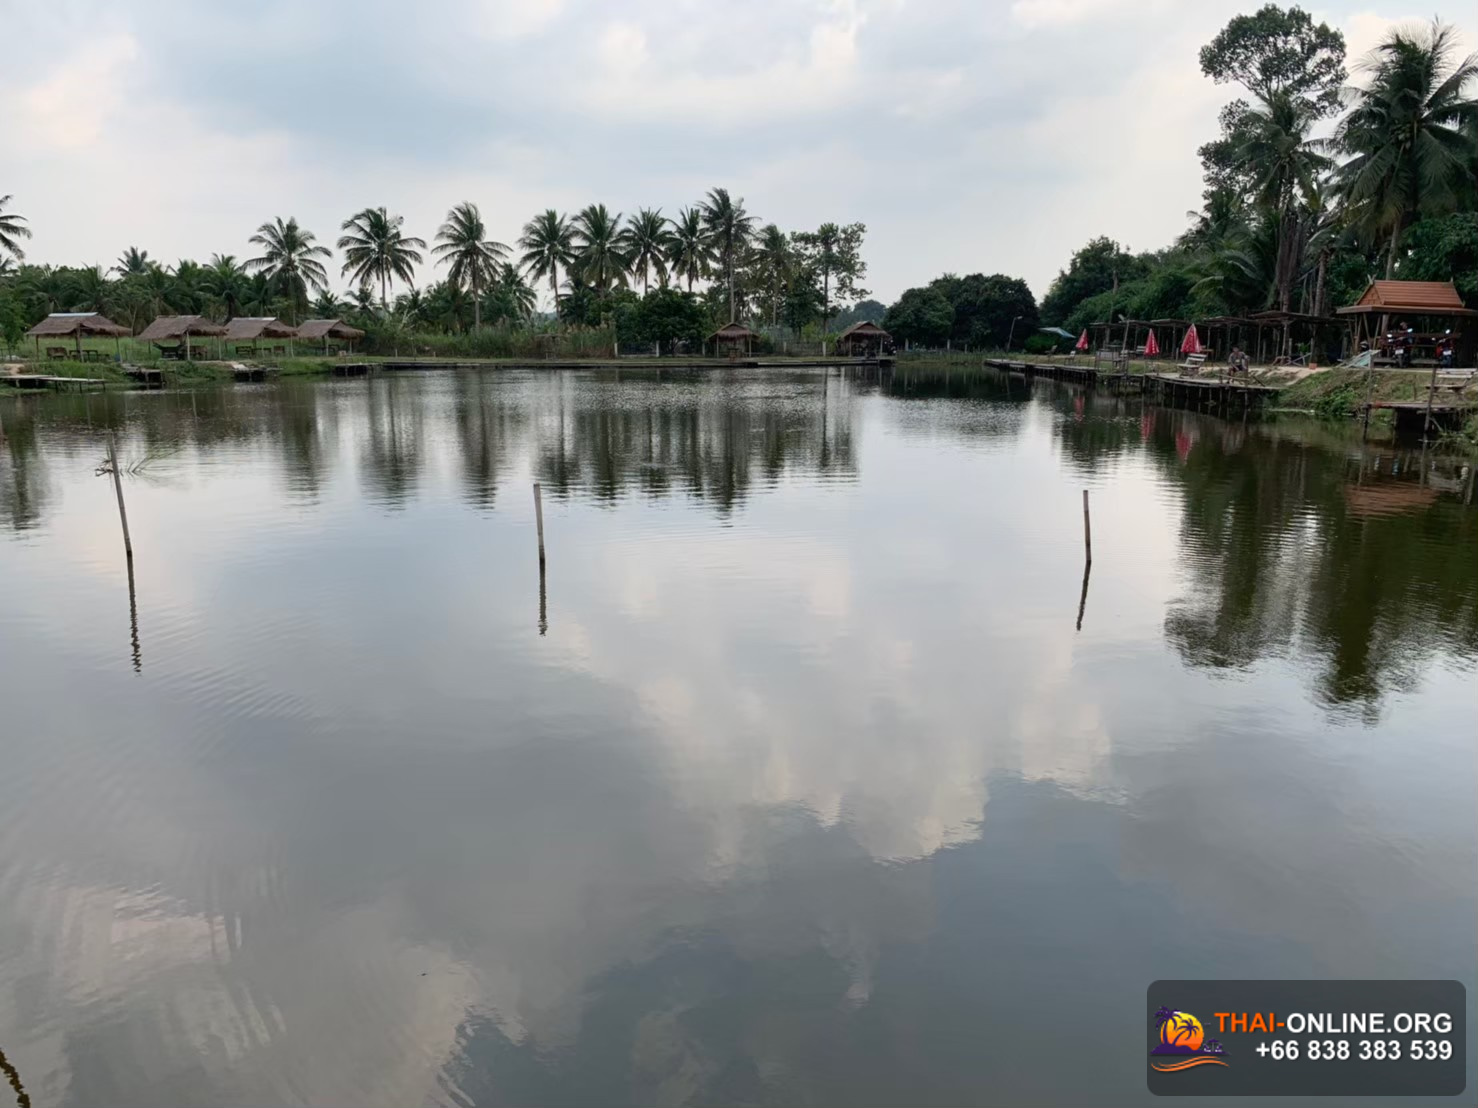 Барбекю на озере и рыбалка экскурсия компании Seven Countries из Паттайи Таиланд фото 17